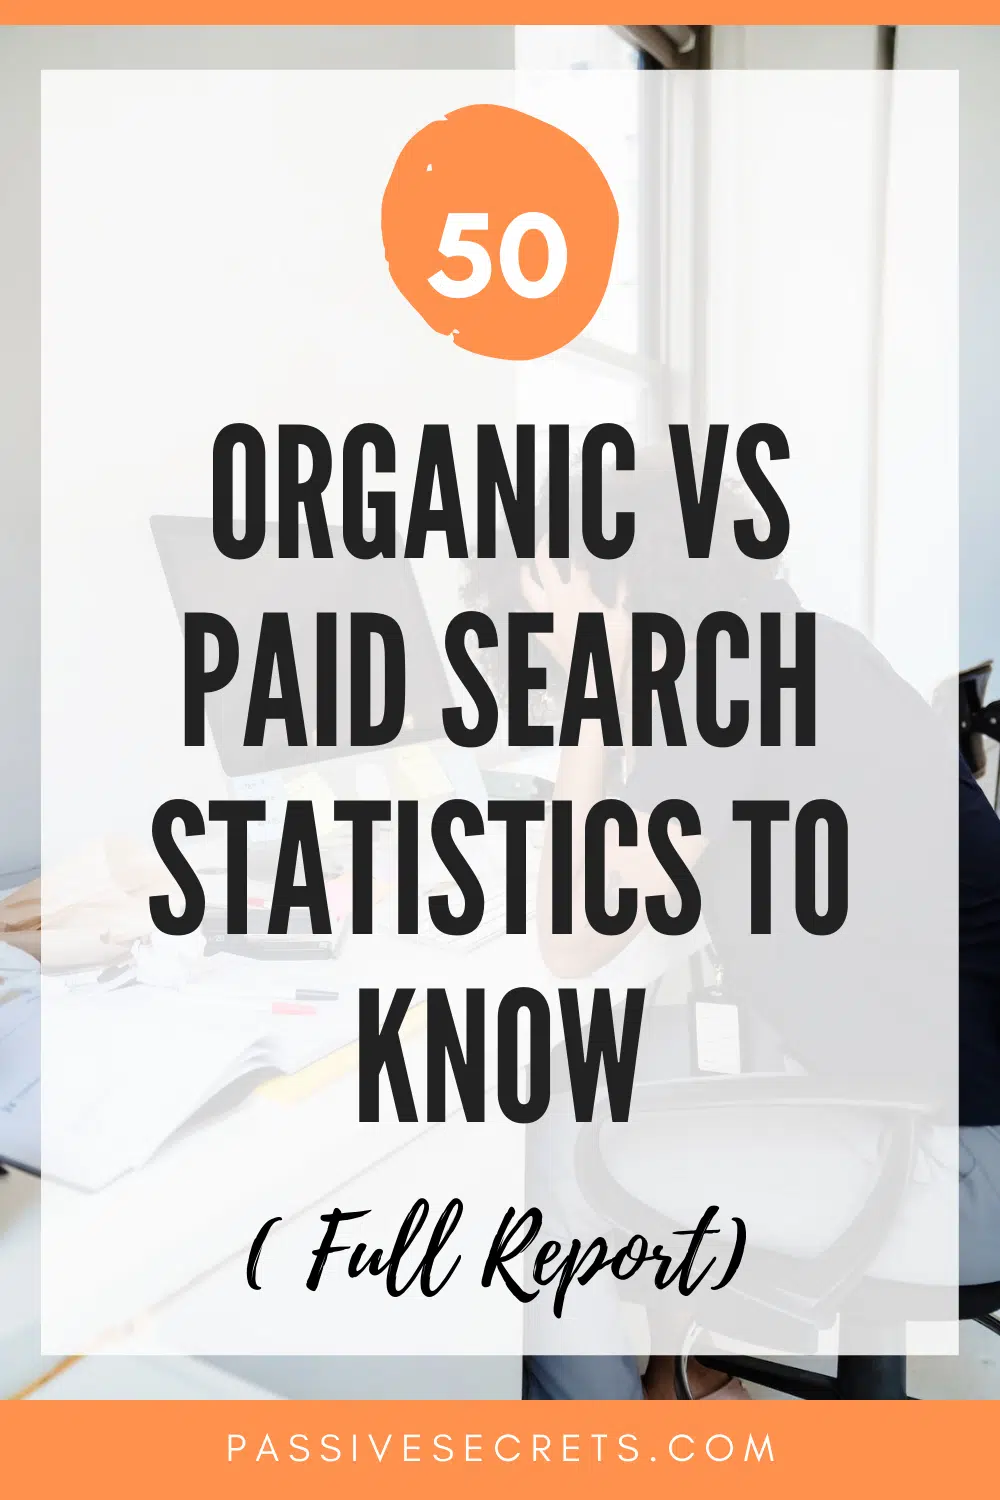 Organic vs paid search passivesecrets